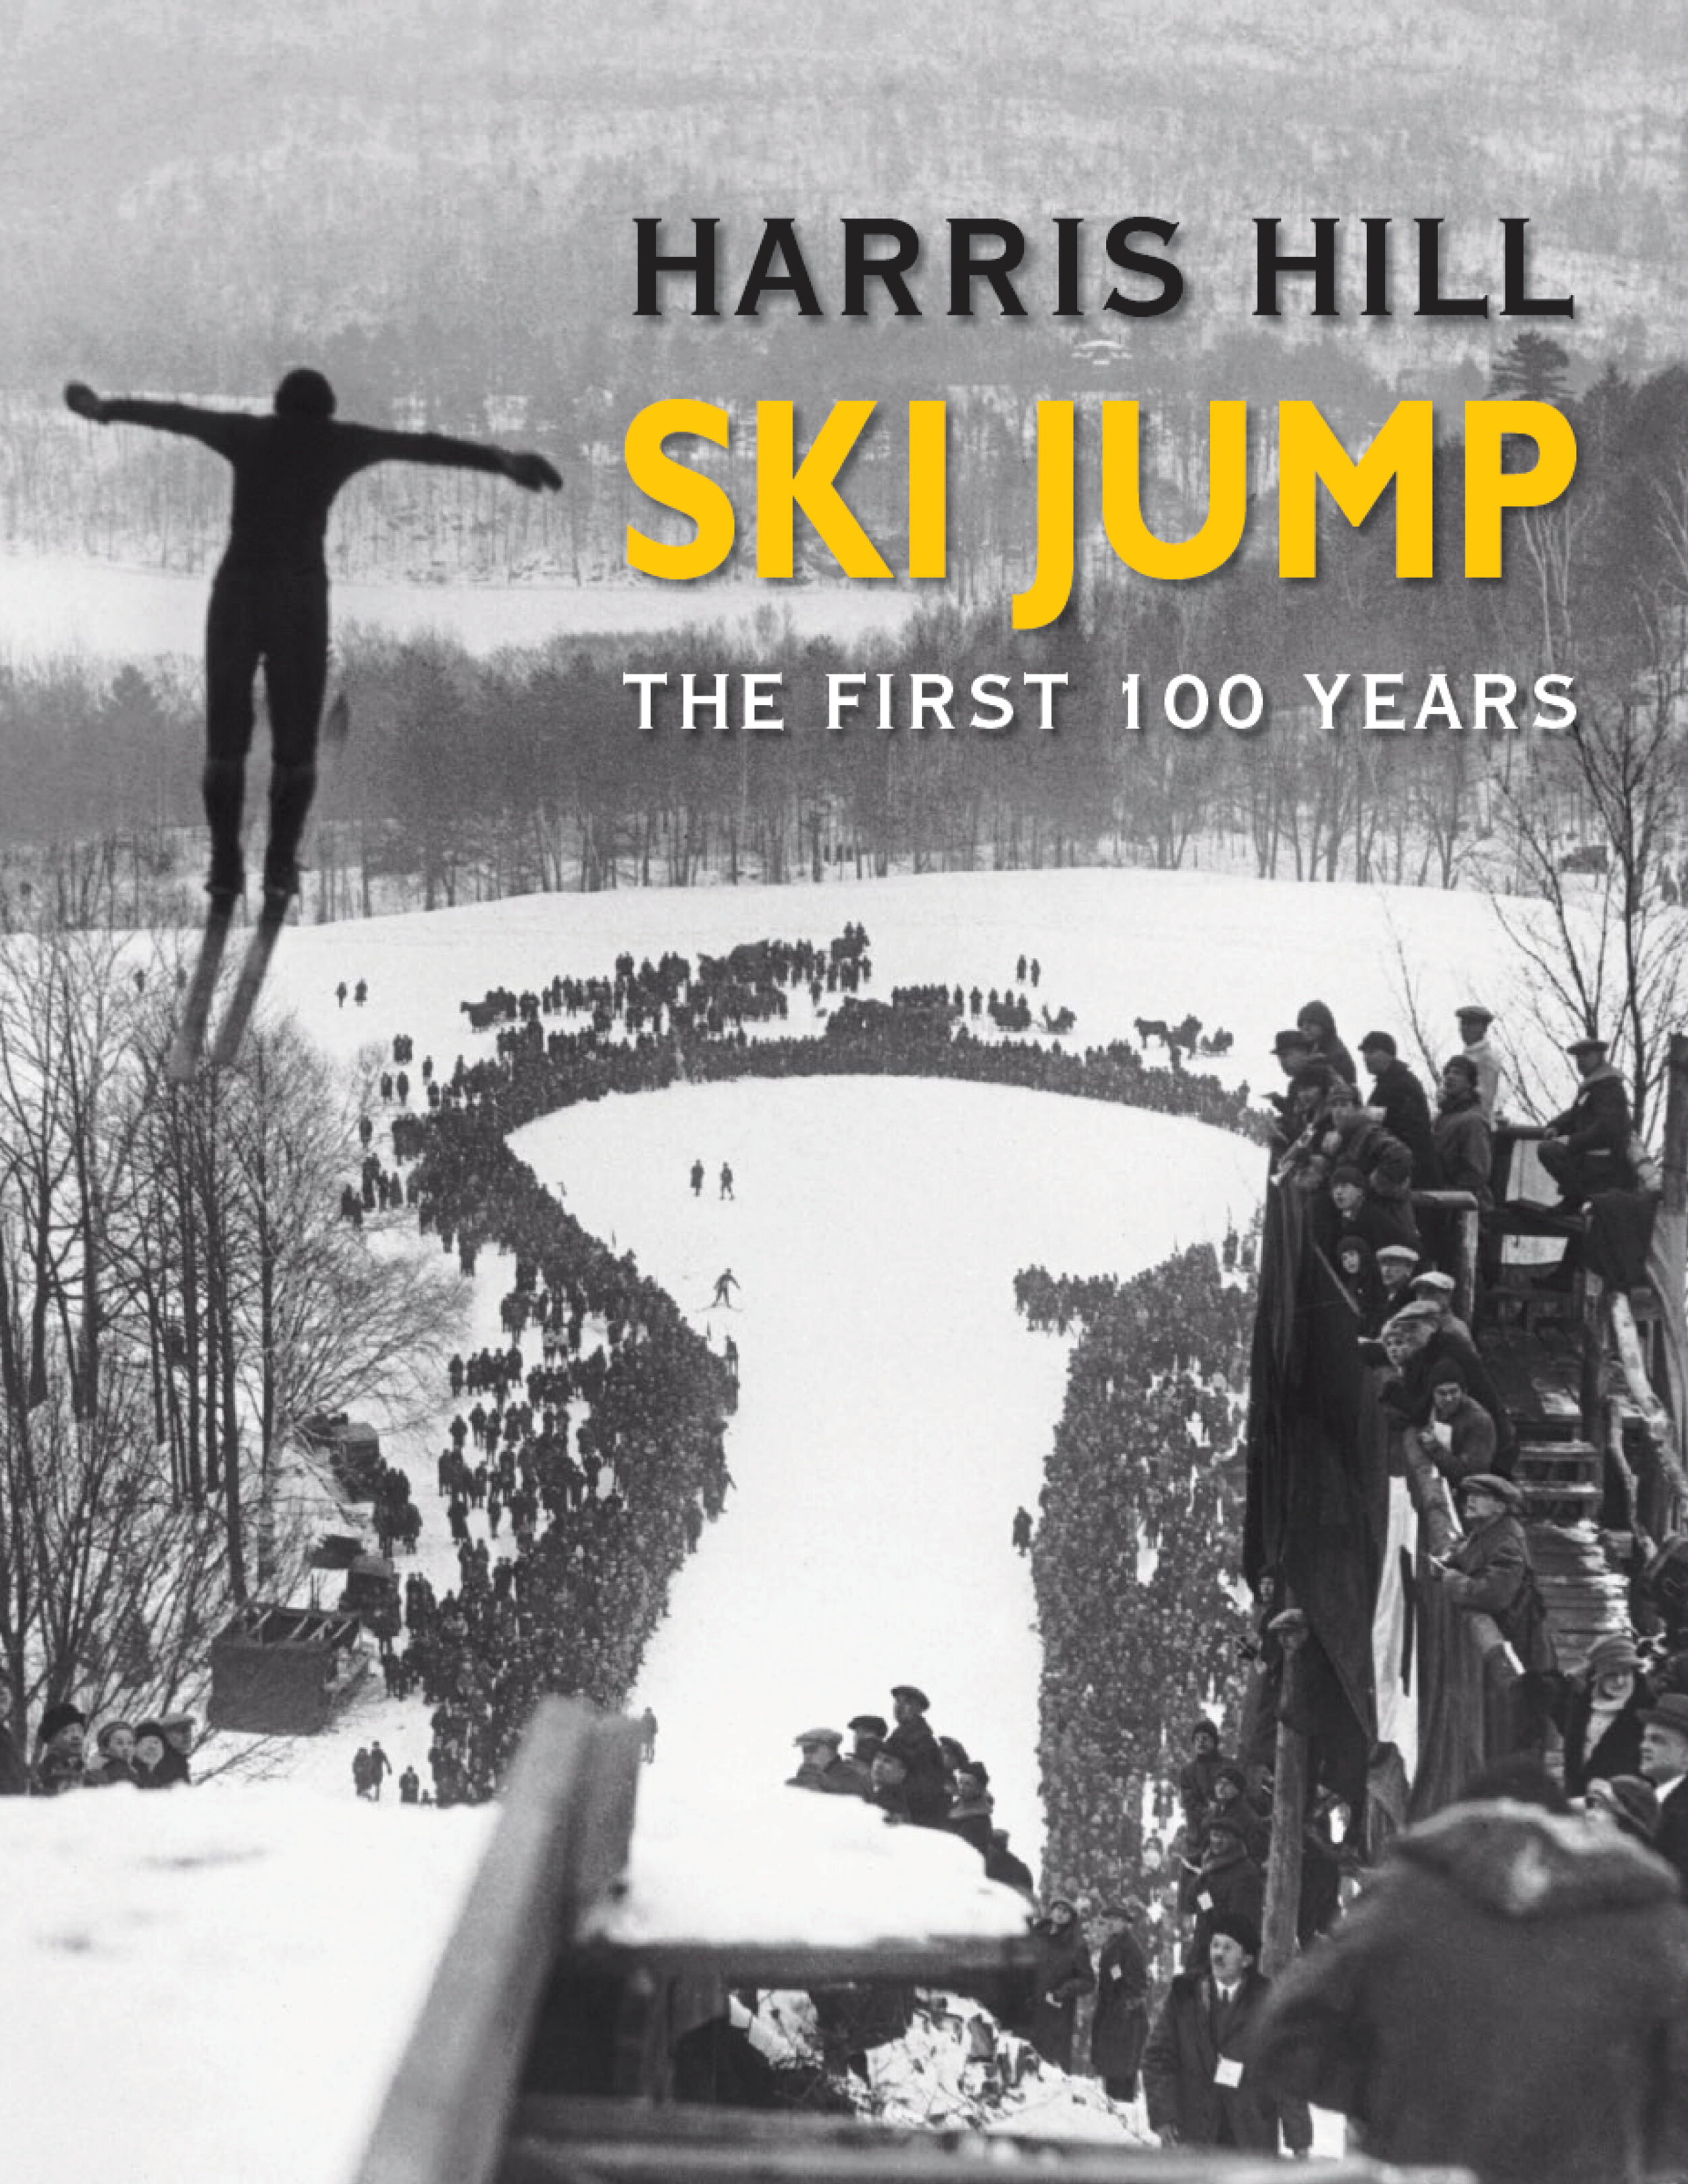 harris hill ski jump live stream